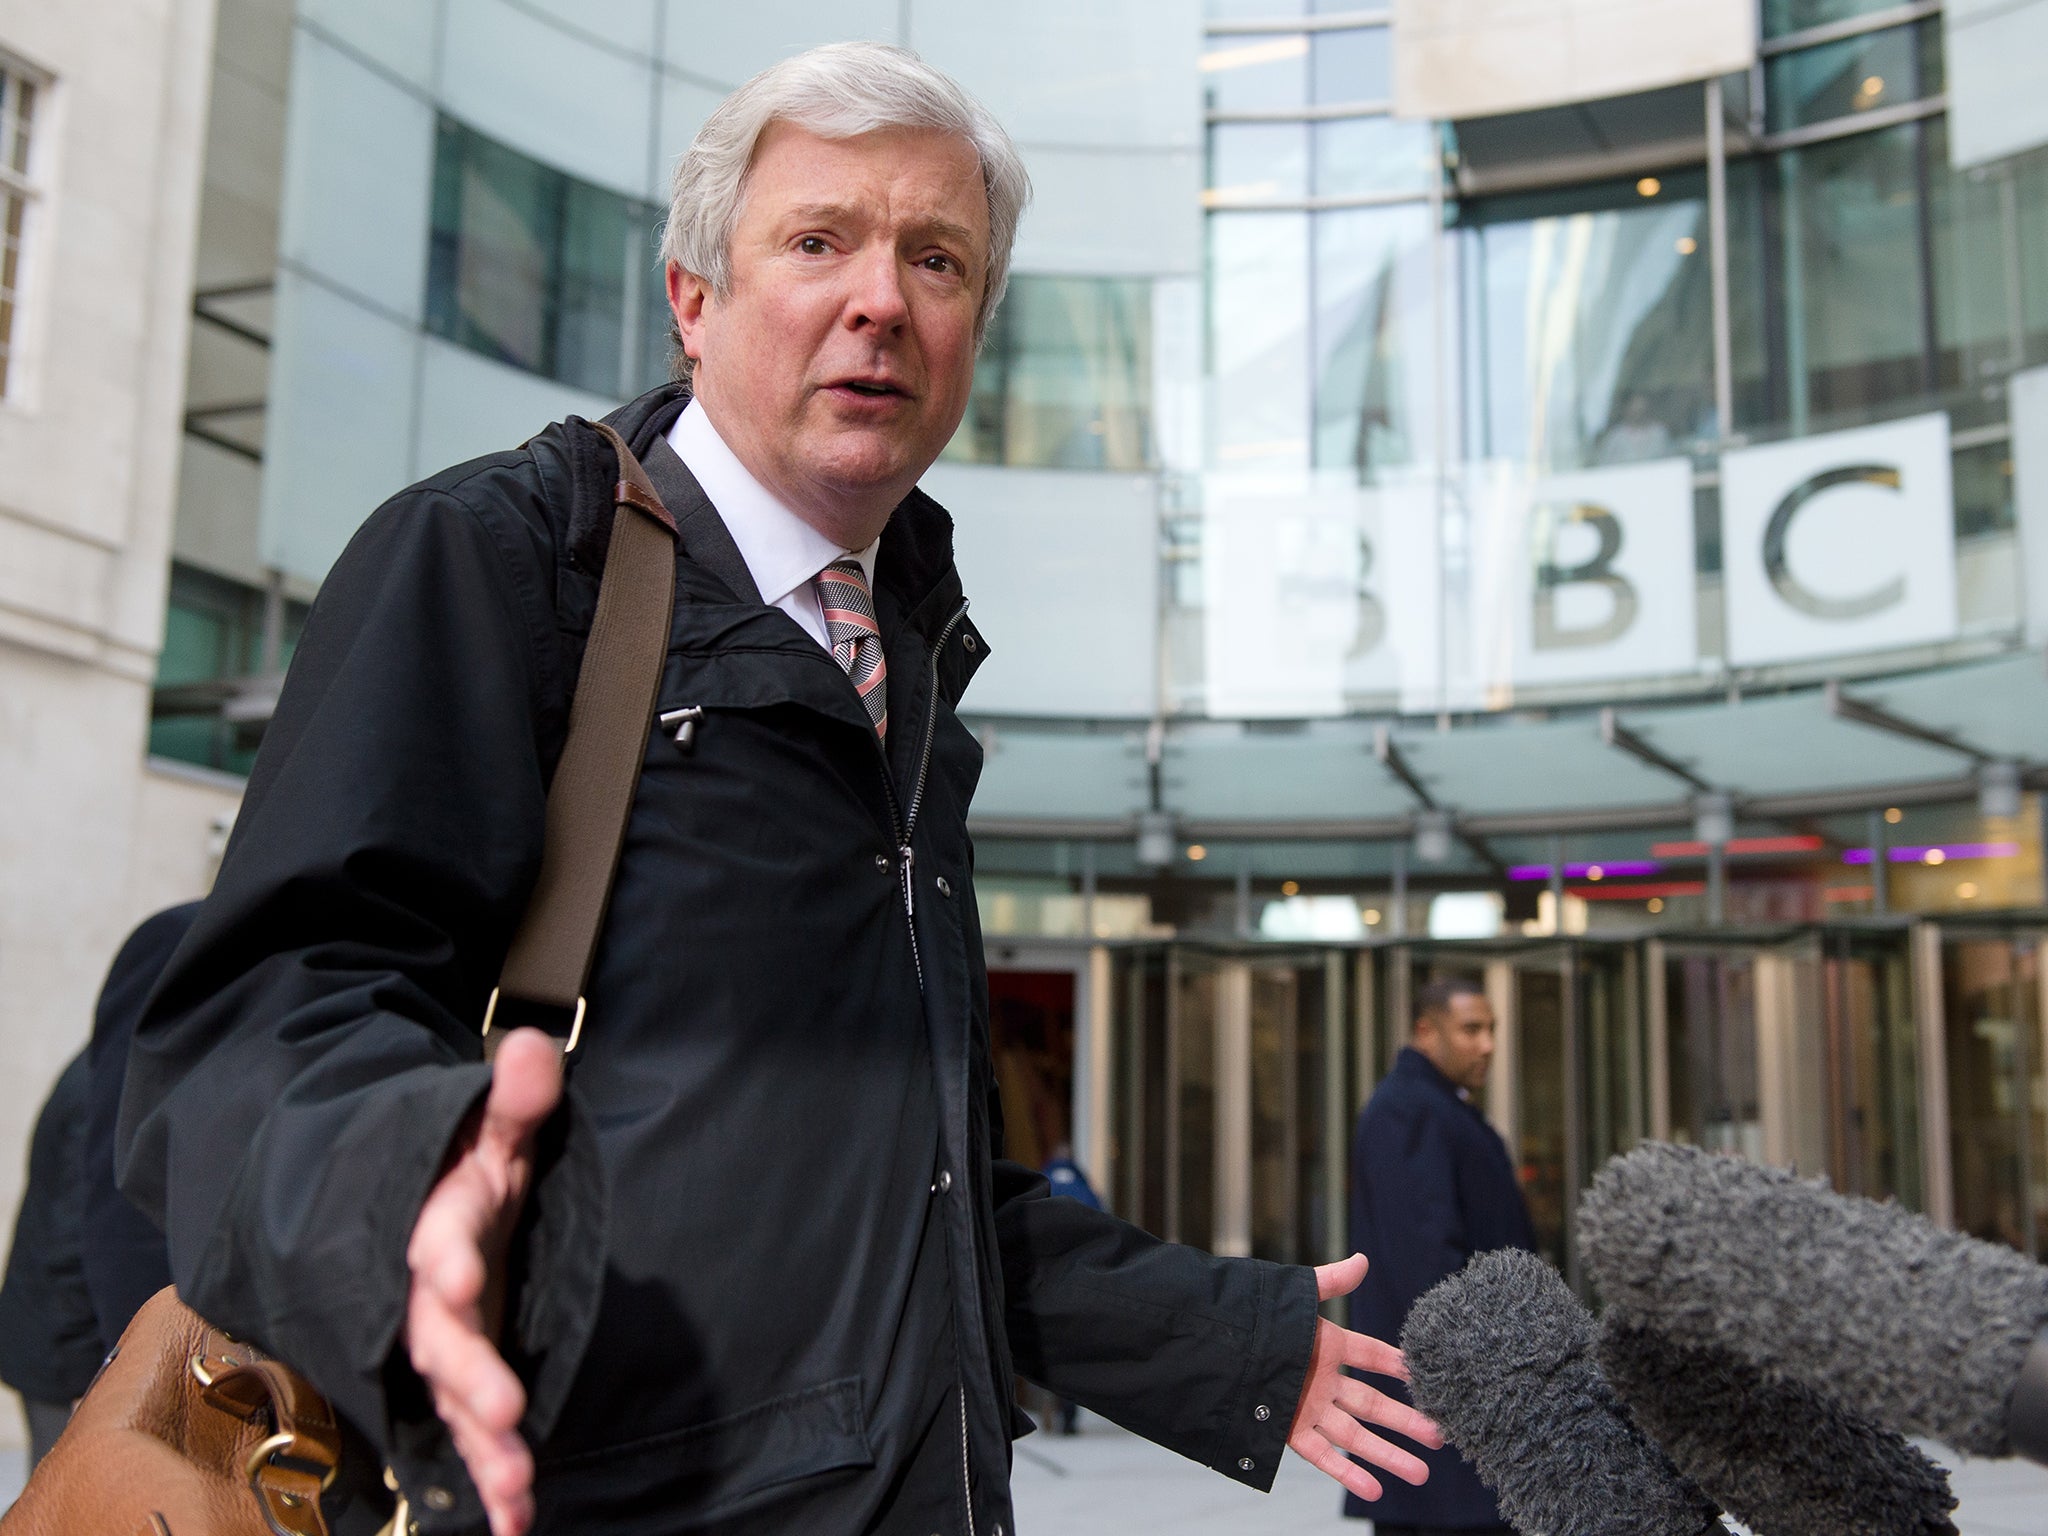 Tony Hall, the BBC director-general